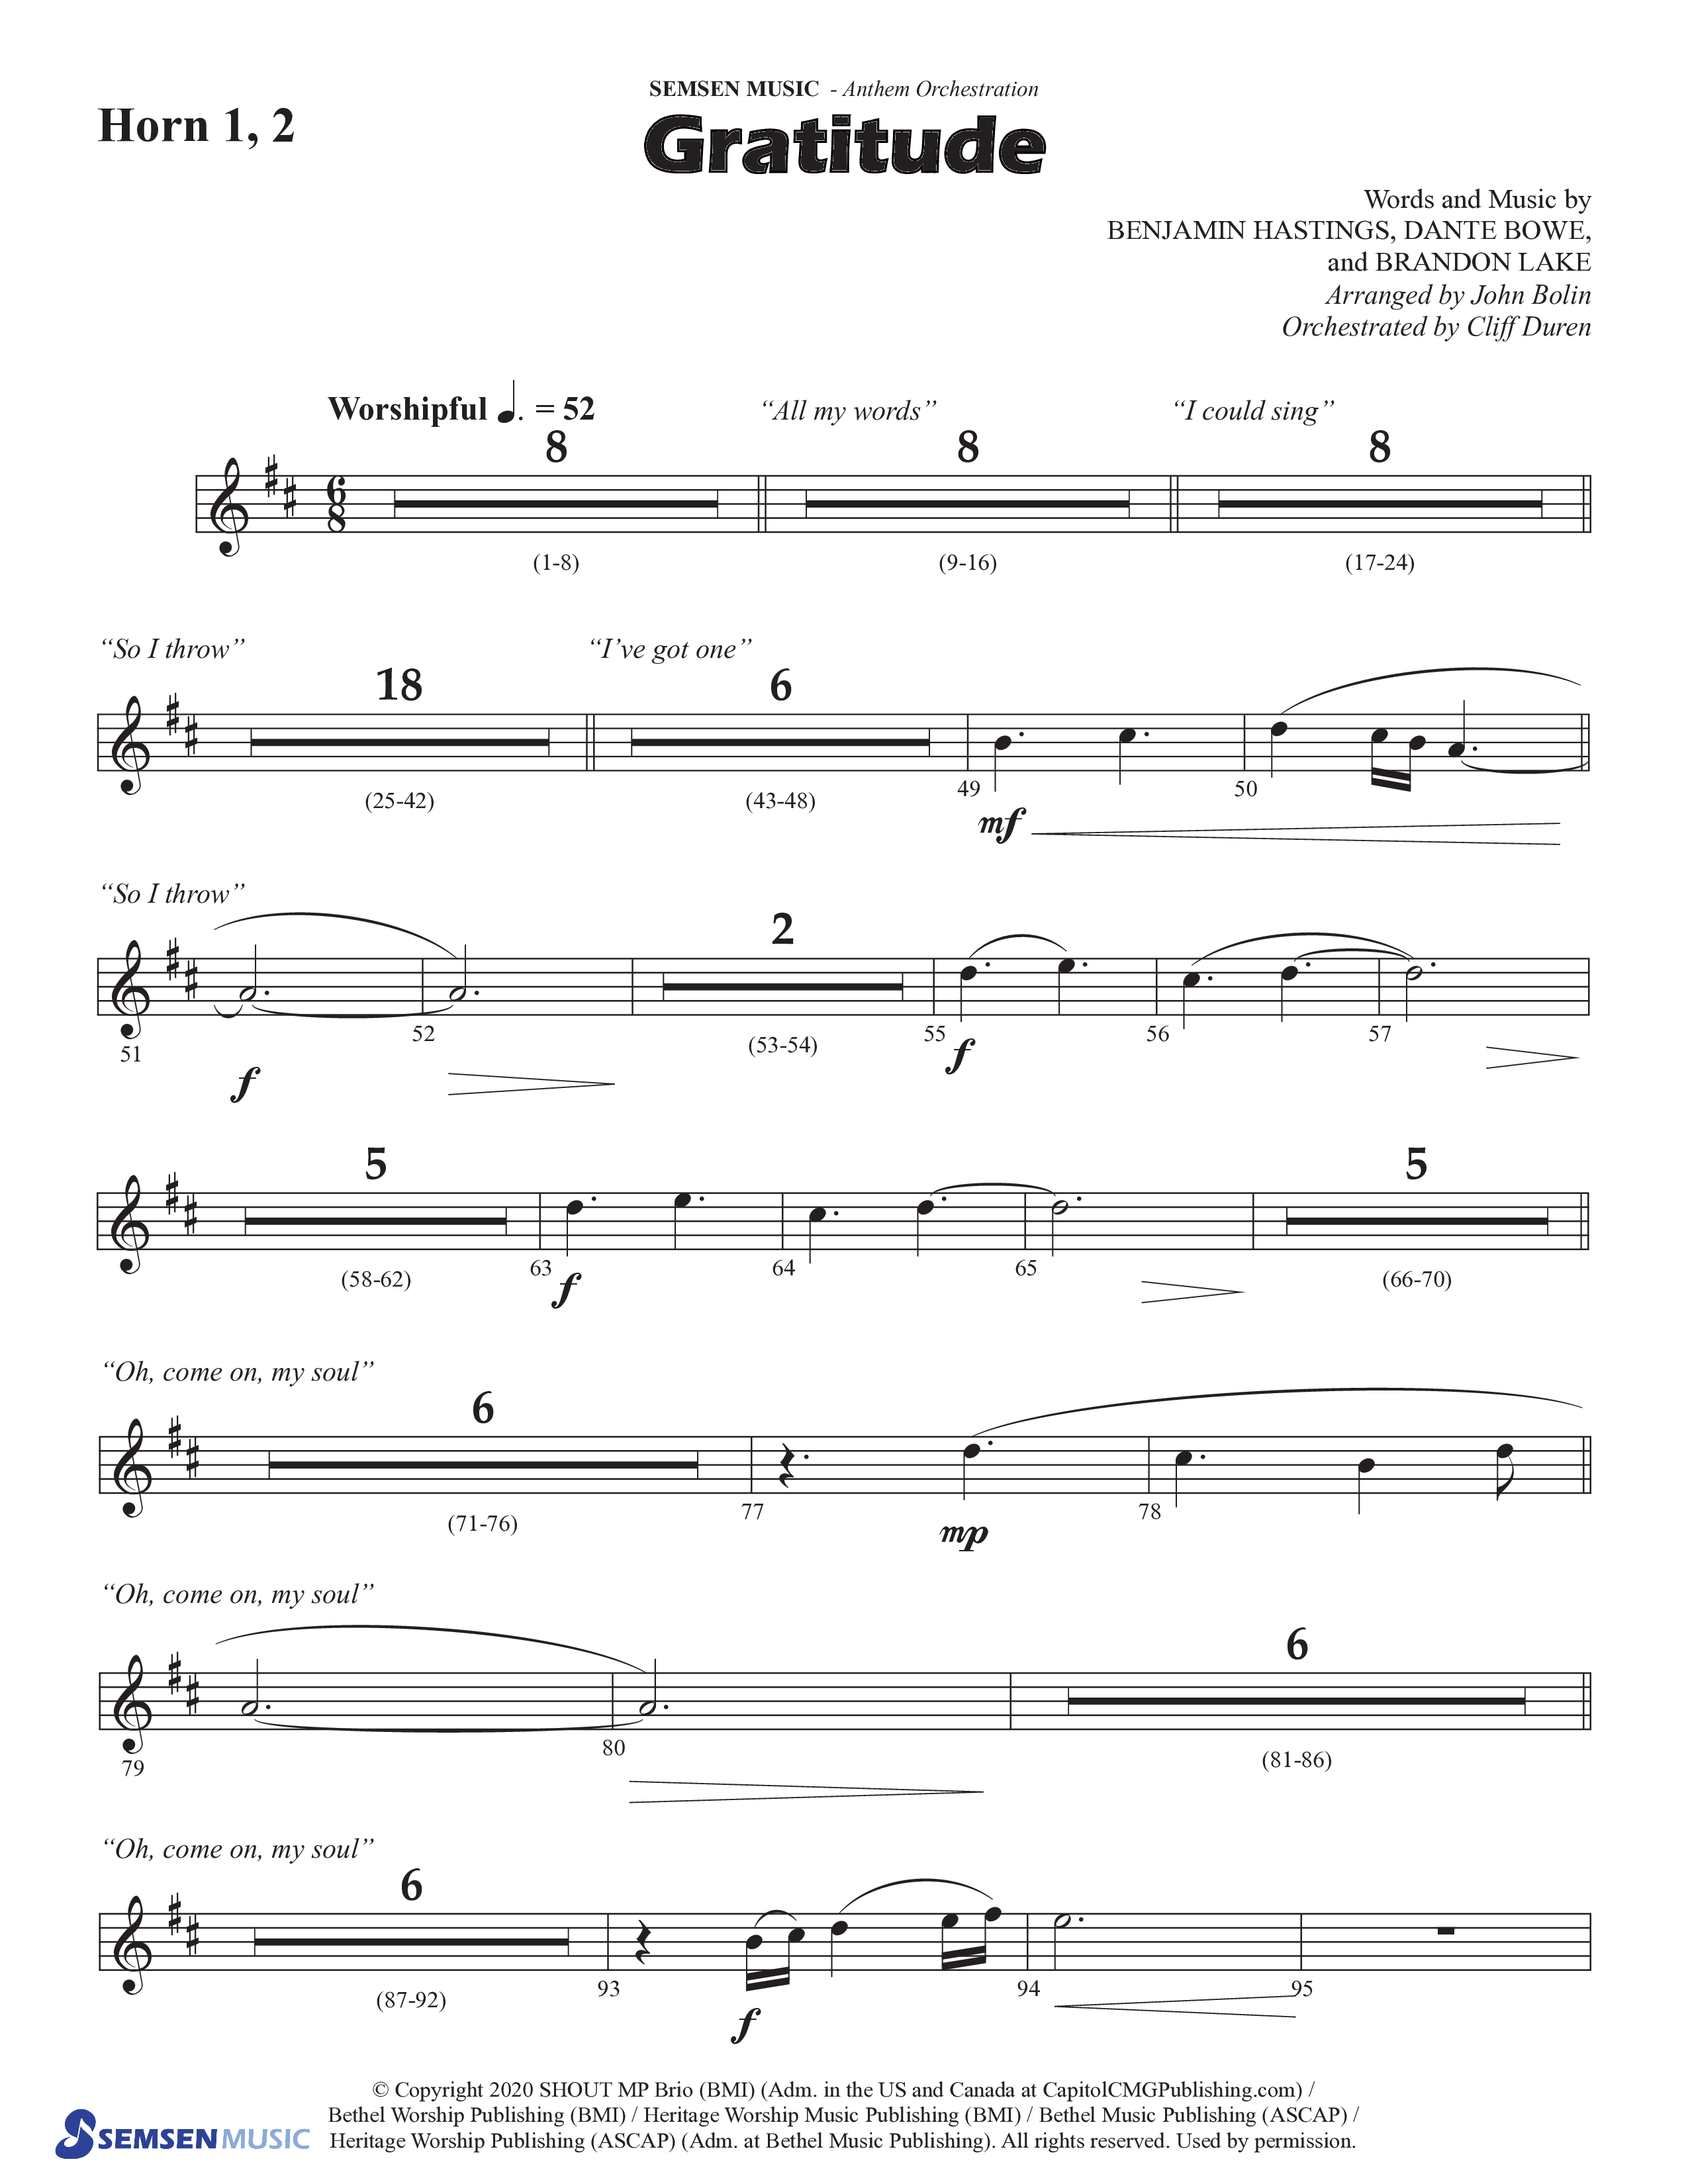 Gratitude (Choral Anthem SATB) French Horn 1/2 (Semsen Music / Arr. John Bolin / Orch. Cliff Duren)